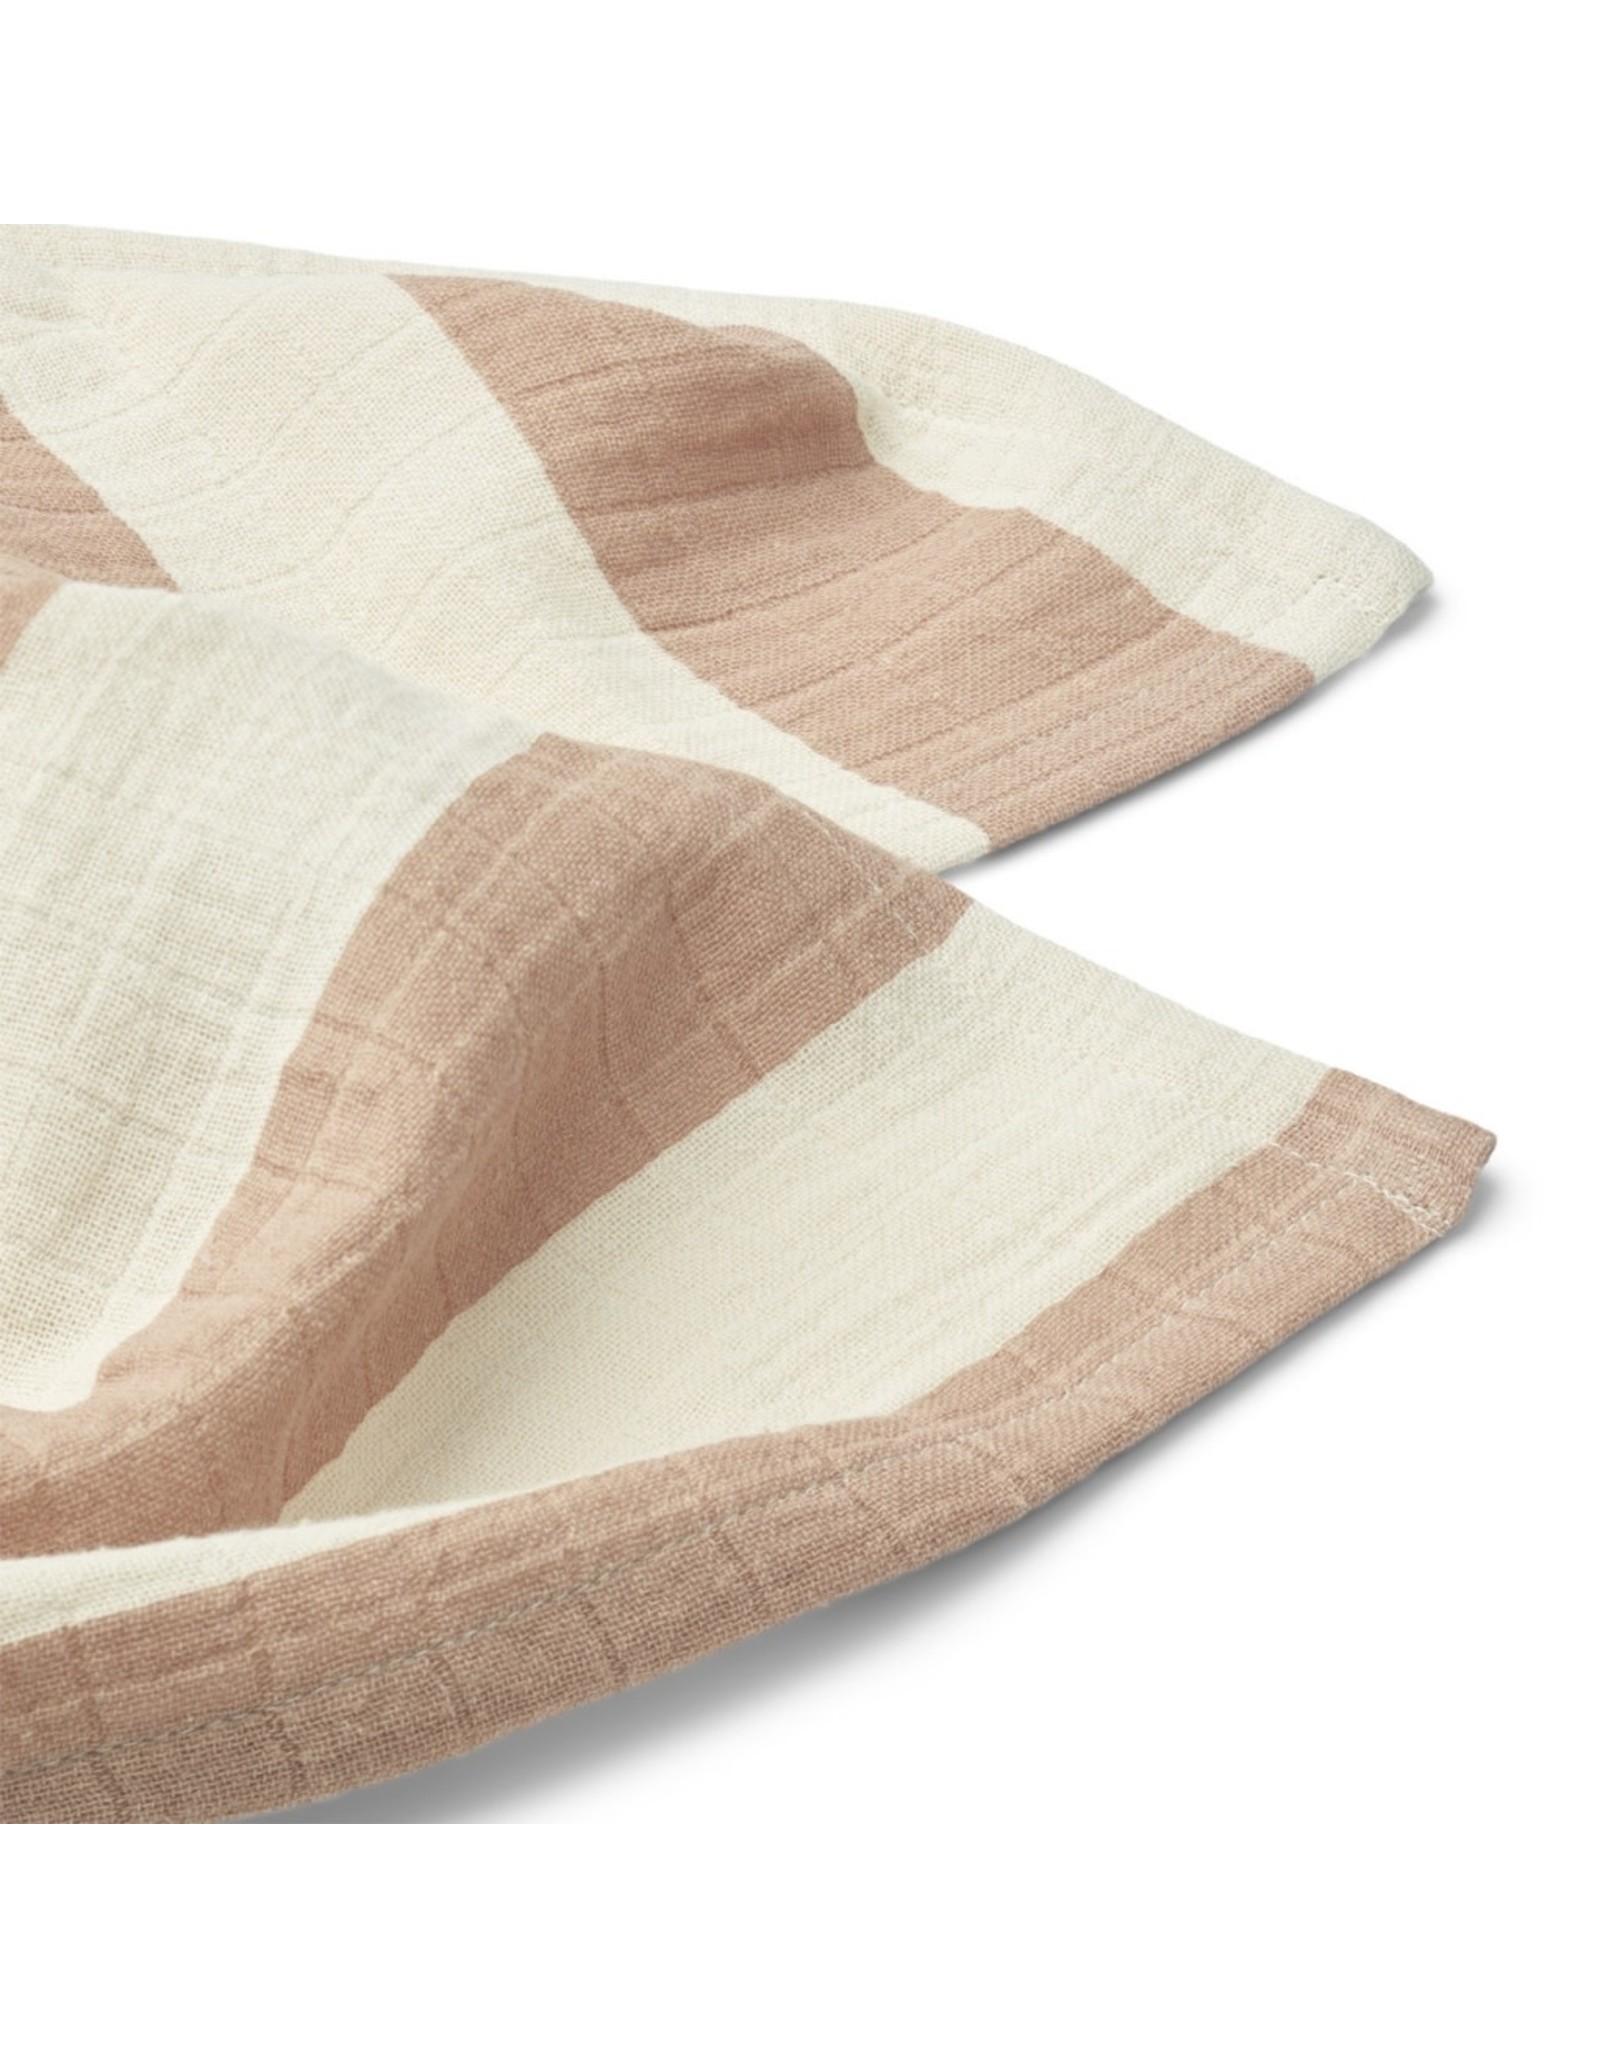 Liewood - Lewis Muslin Cloth 2-pack - Stripe Pale Tuscany /Sandy